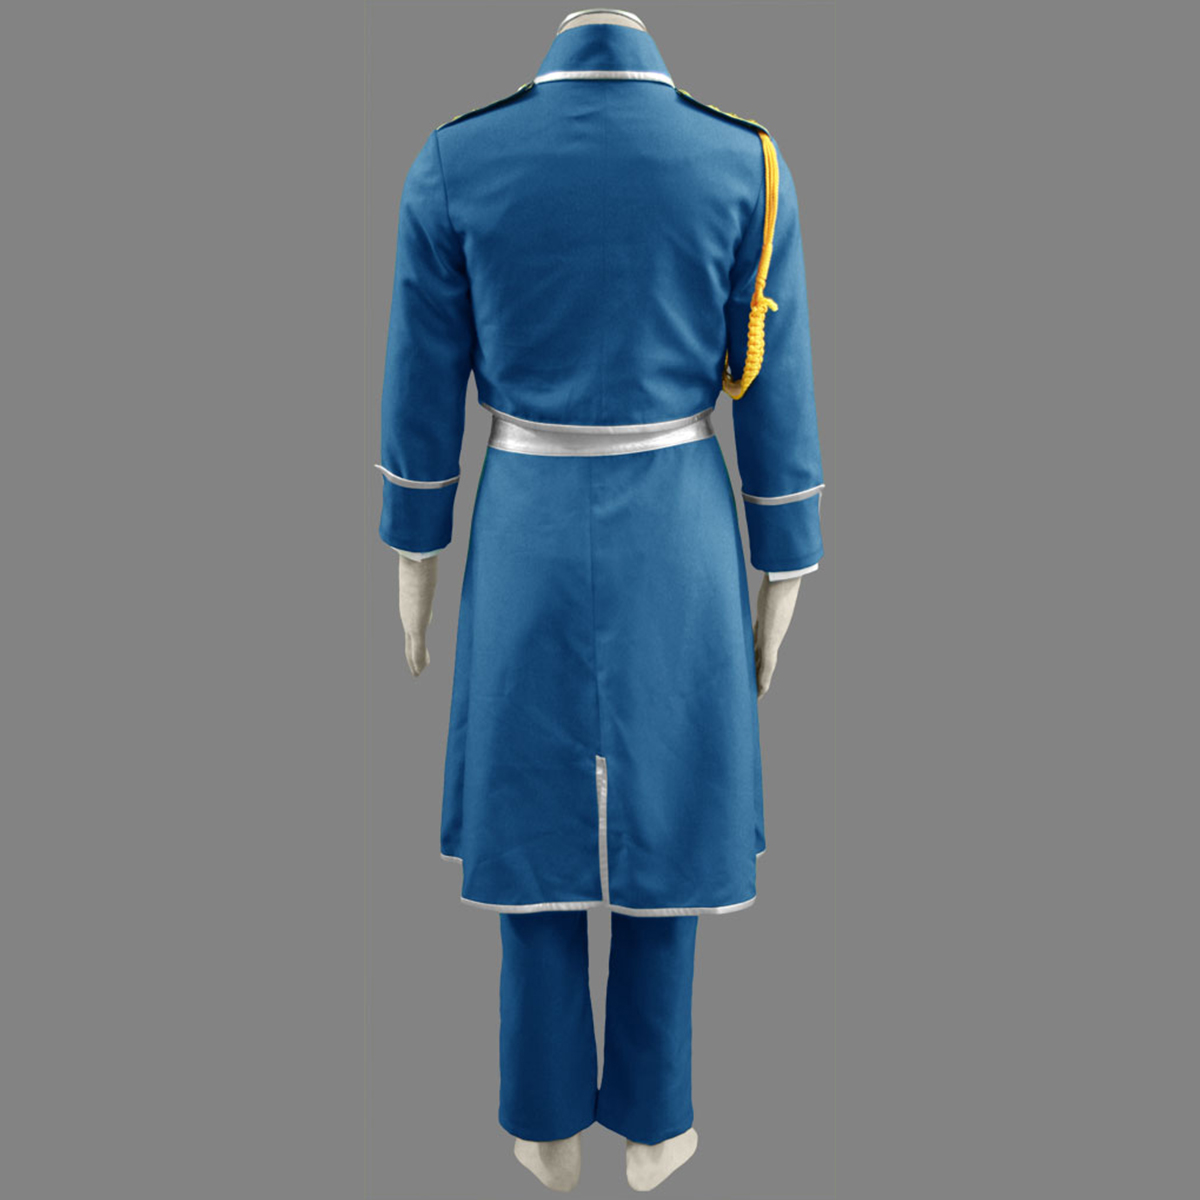 Fullmetal Alchemist Male Military Uniform Cosplay Costumes New Zealand Online Store